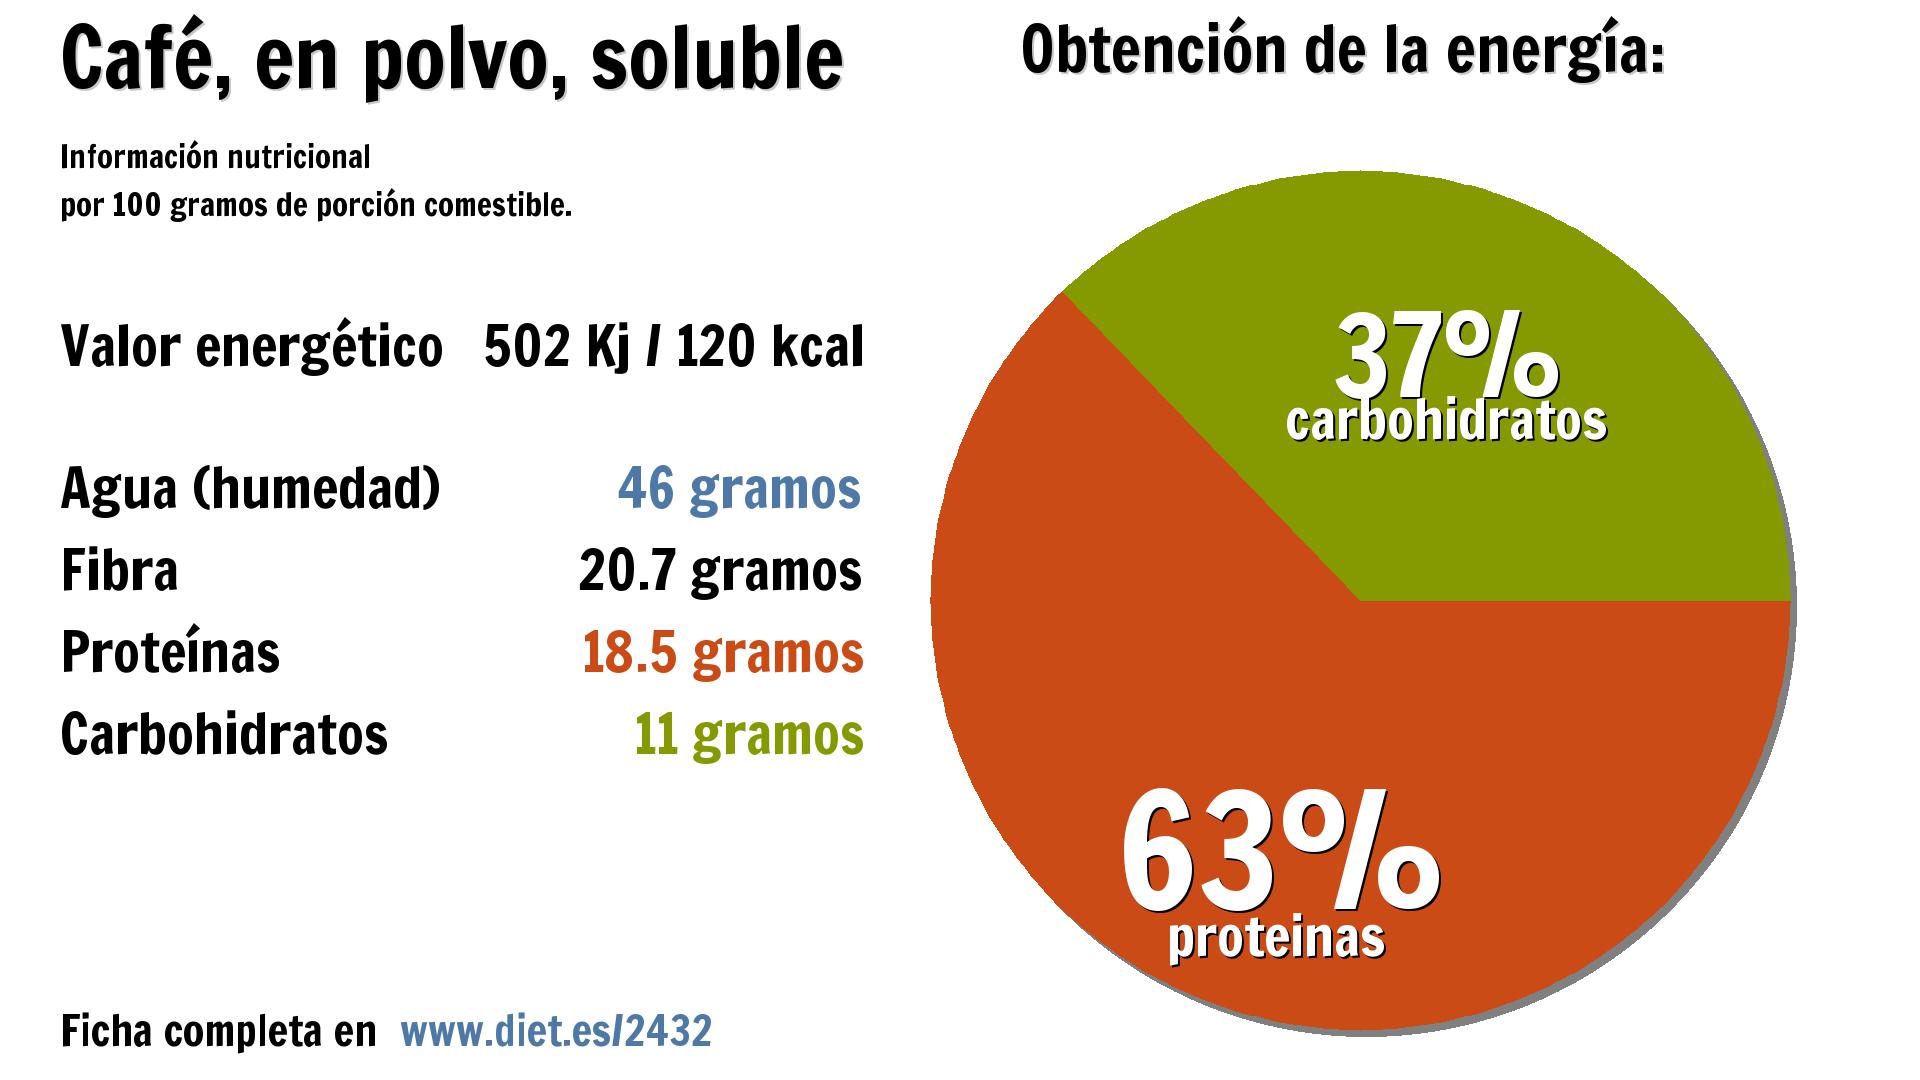 Café, en polvo, soluble: energía 502 Kj, agua 46 g., fibra 21 g., proteínas 19 g. y carbohidratos 11 g.